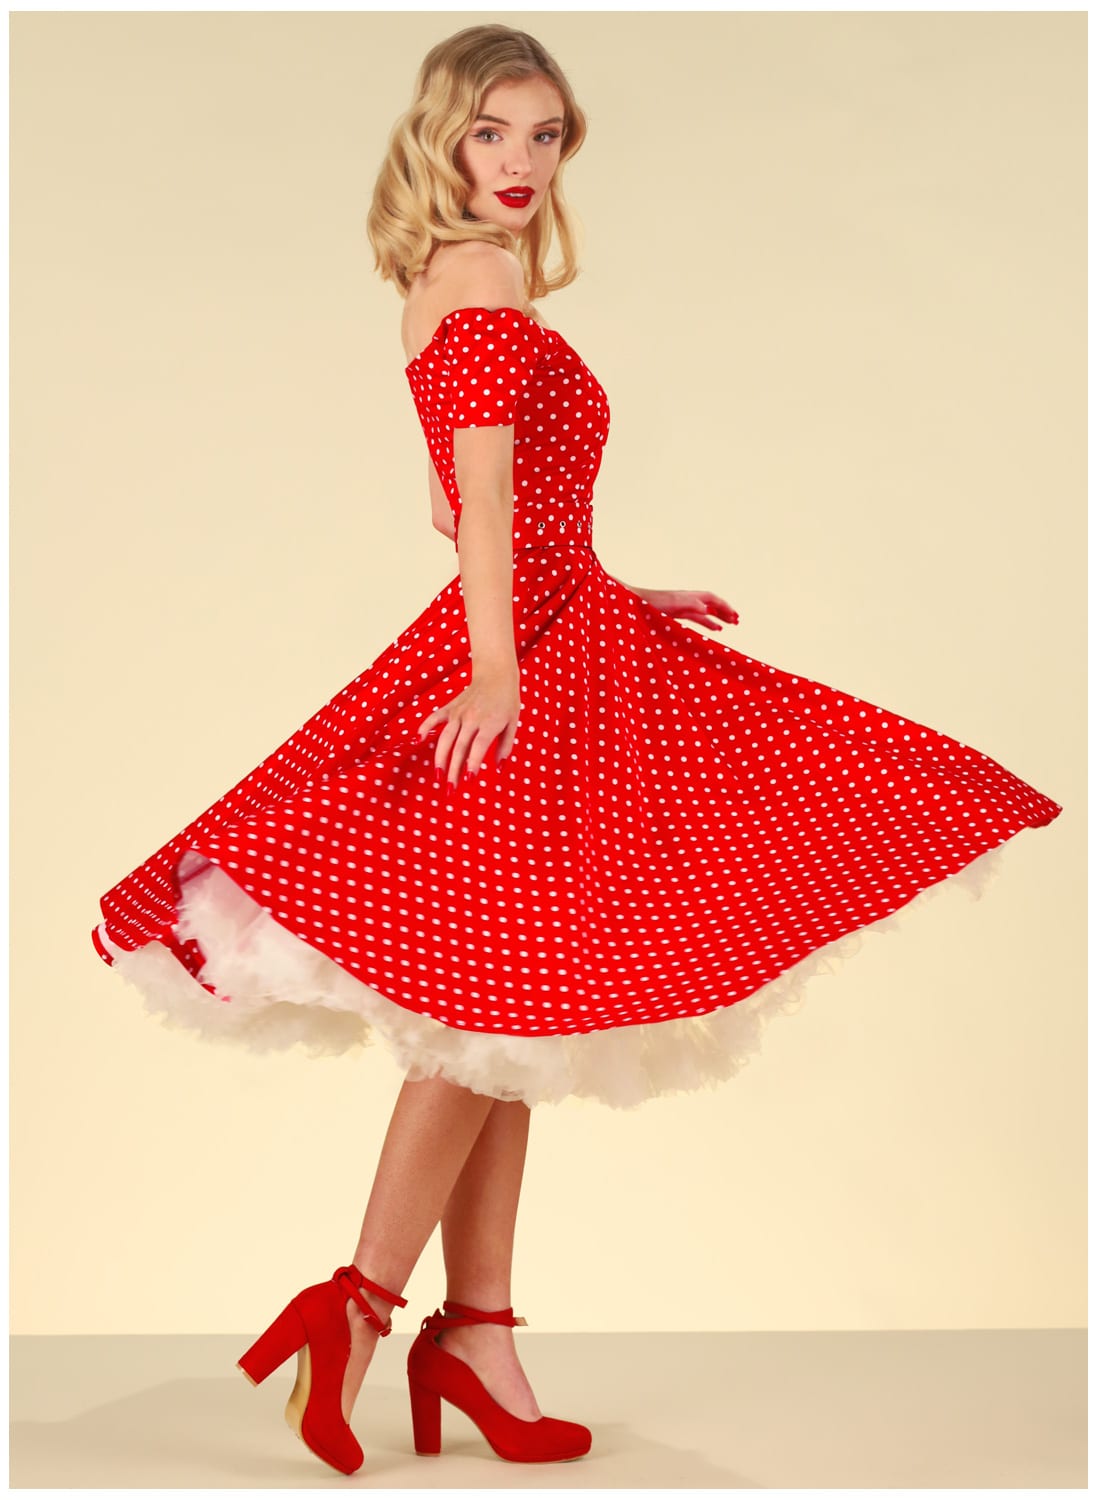 50s red polka dot dress